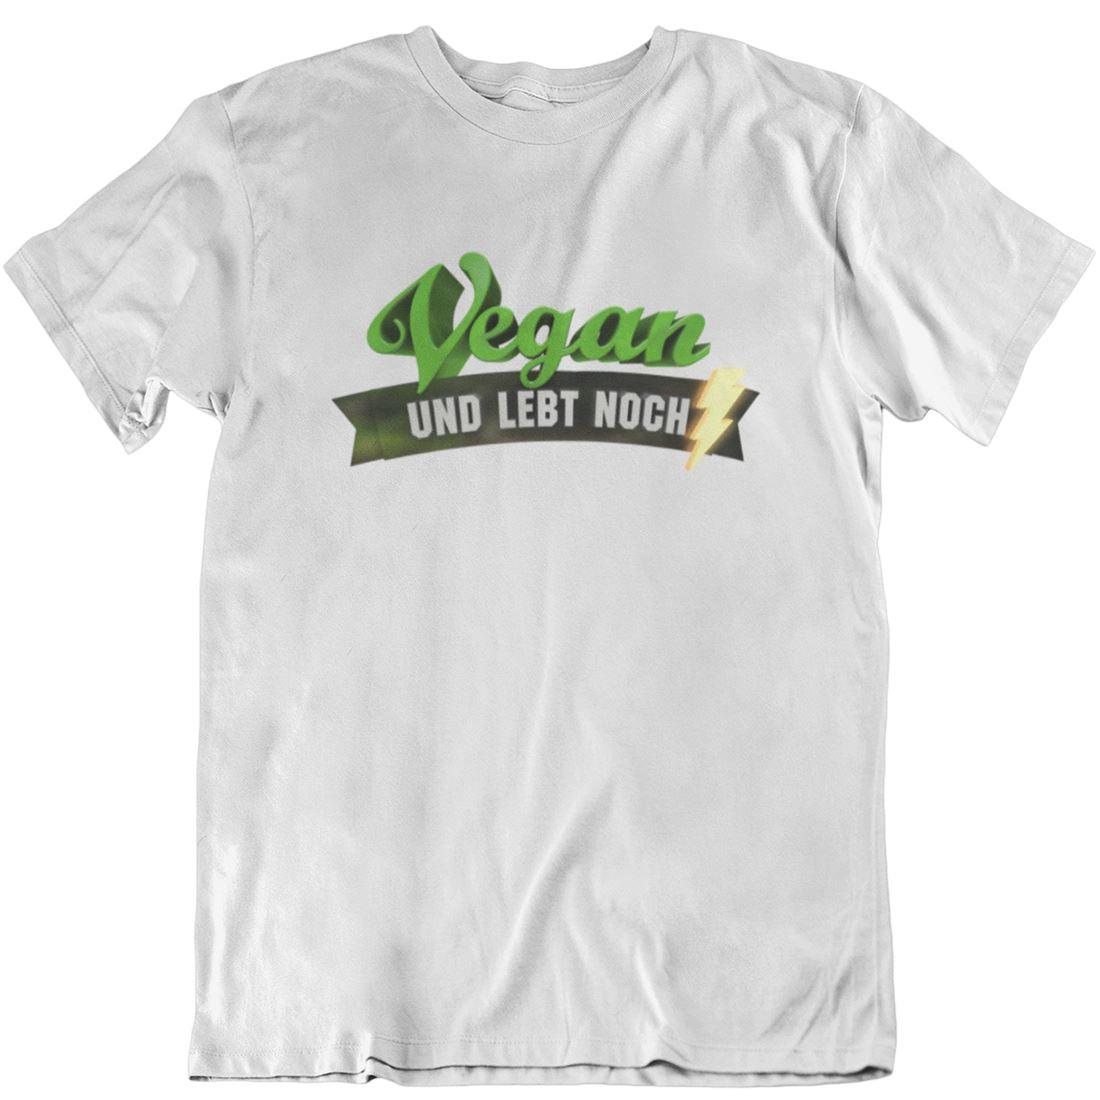 Vegan und lebt noch [v-reena] - Unisex Organic Shirt - Team Vegan © vegan t shirt